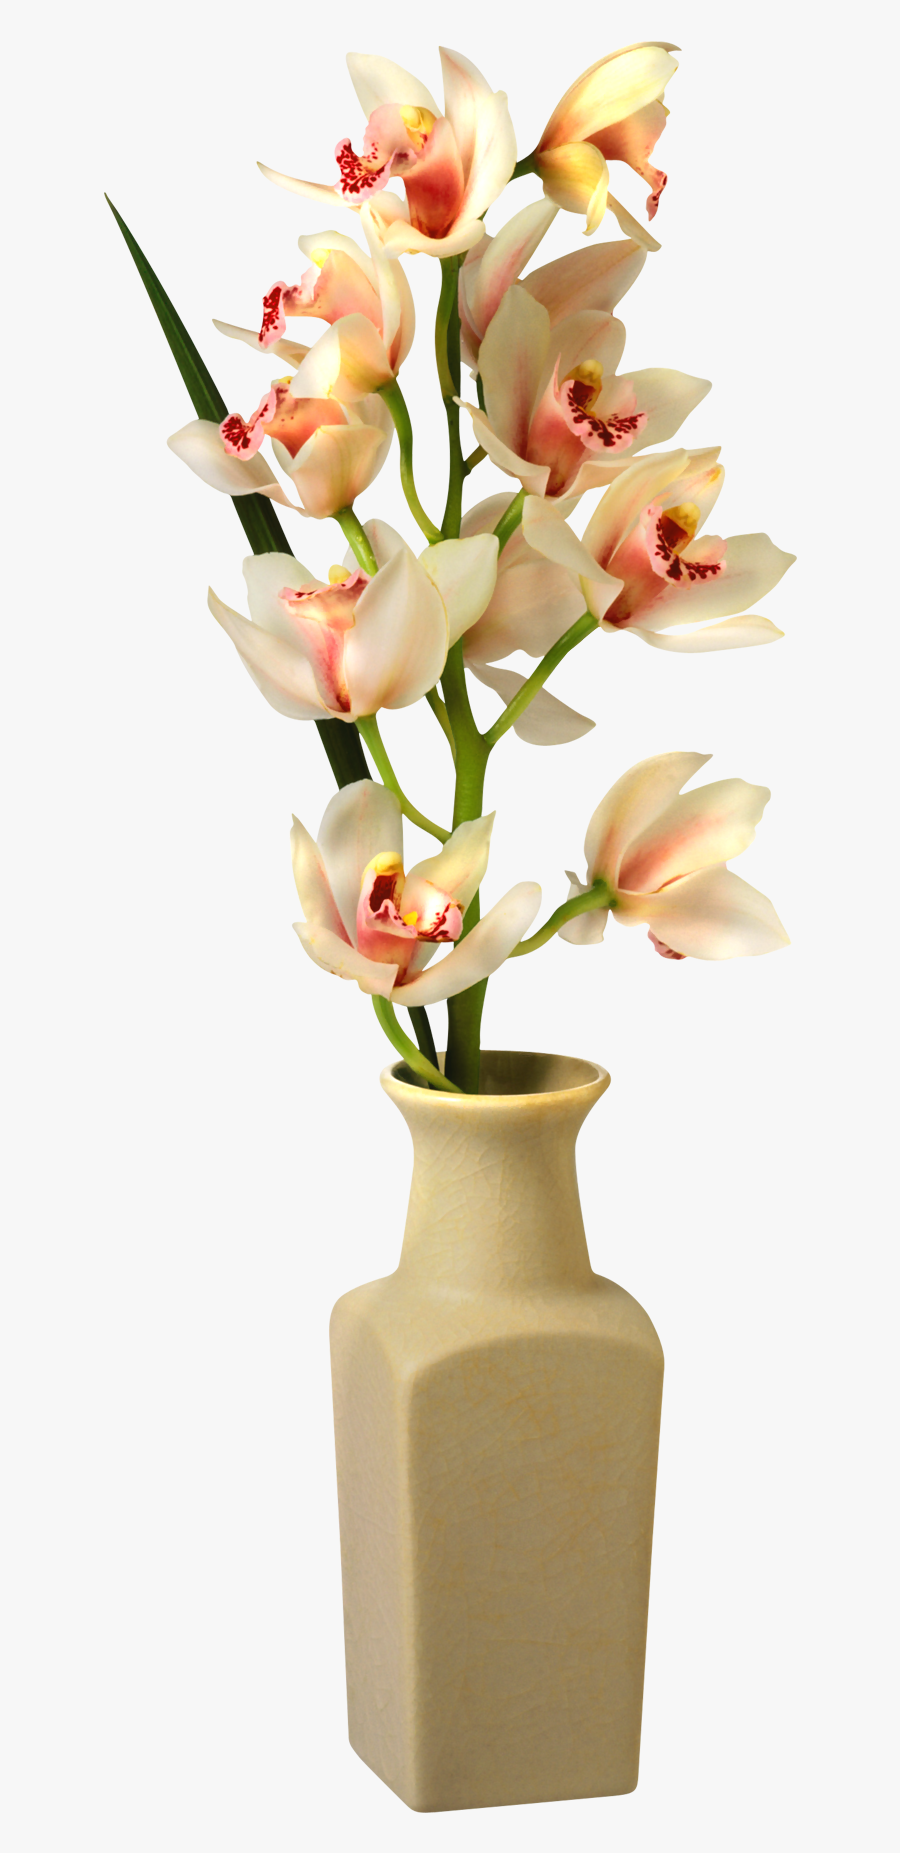 Vase Png Transparent Flower Vase , Free Transparent Clipart - ClipartKey